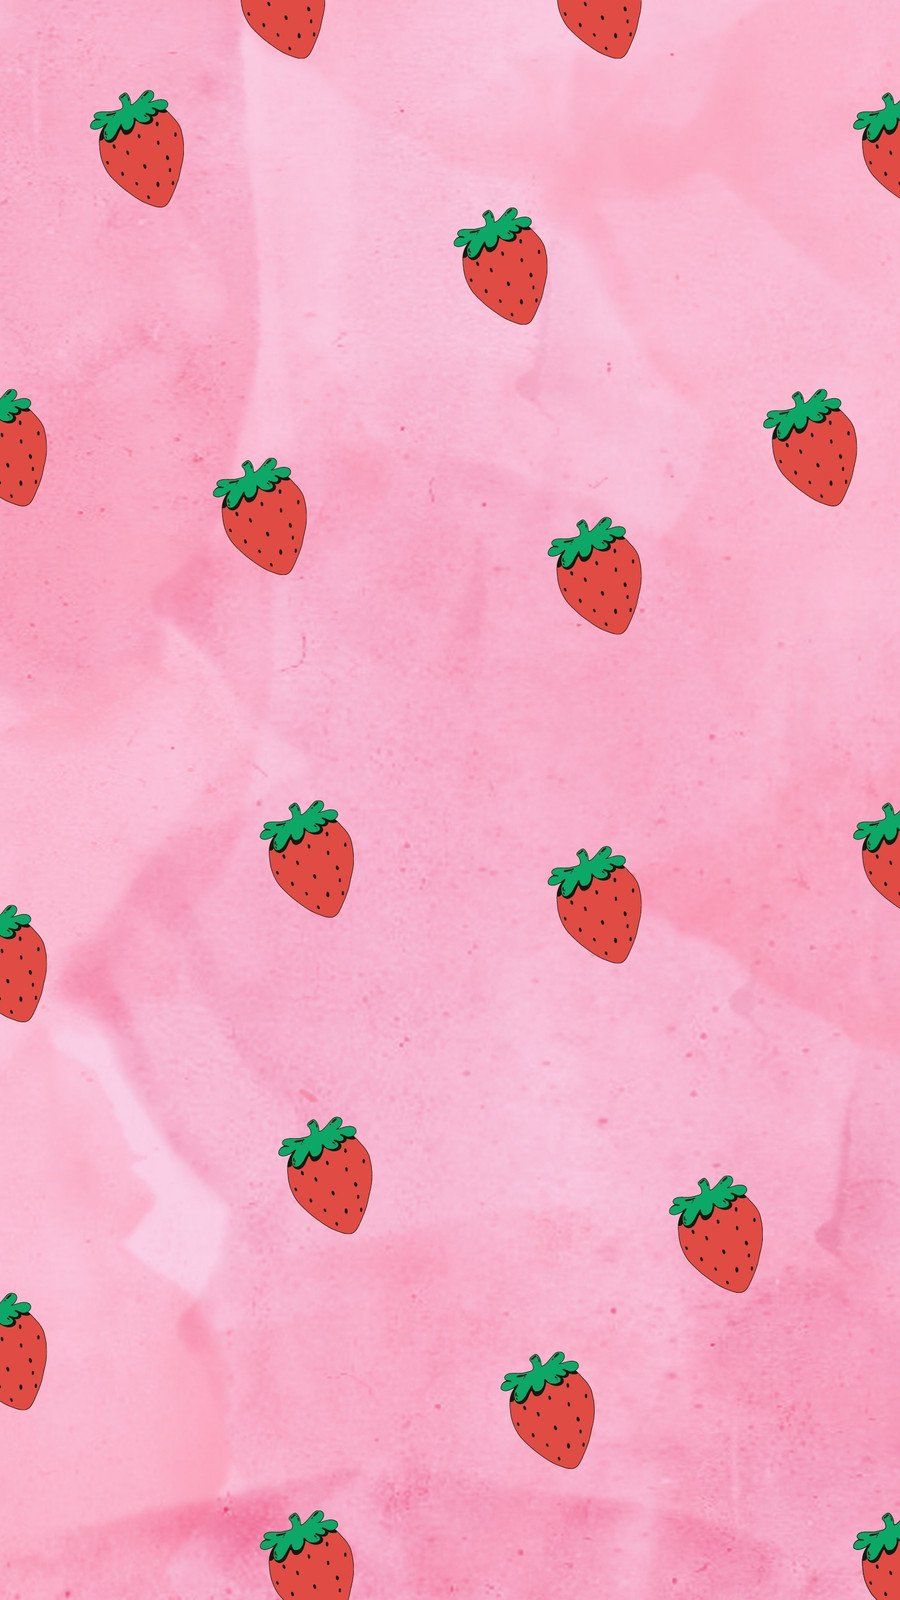 Strawberry wallpaper for phone or desktop. - Easter